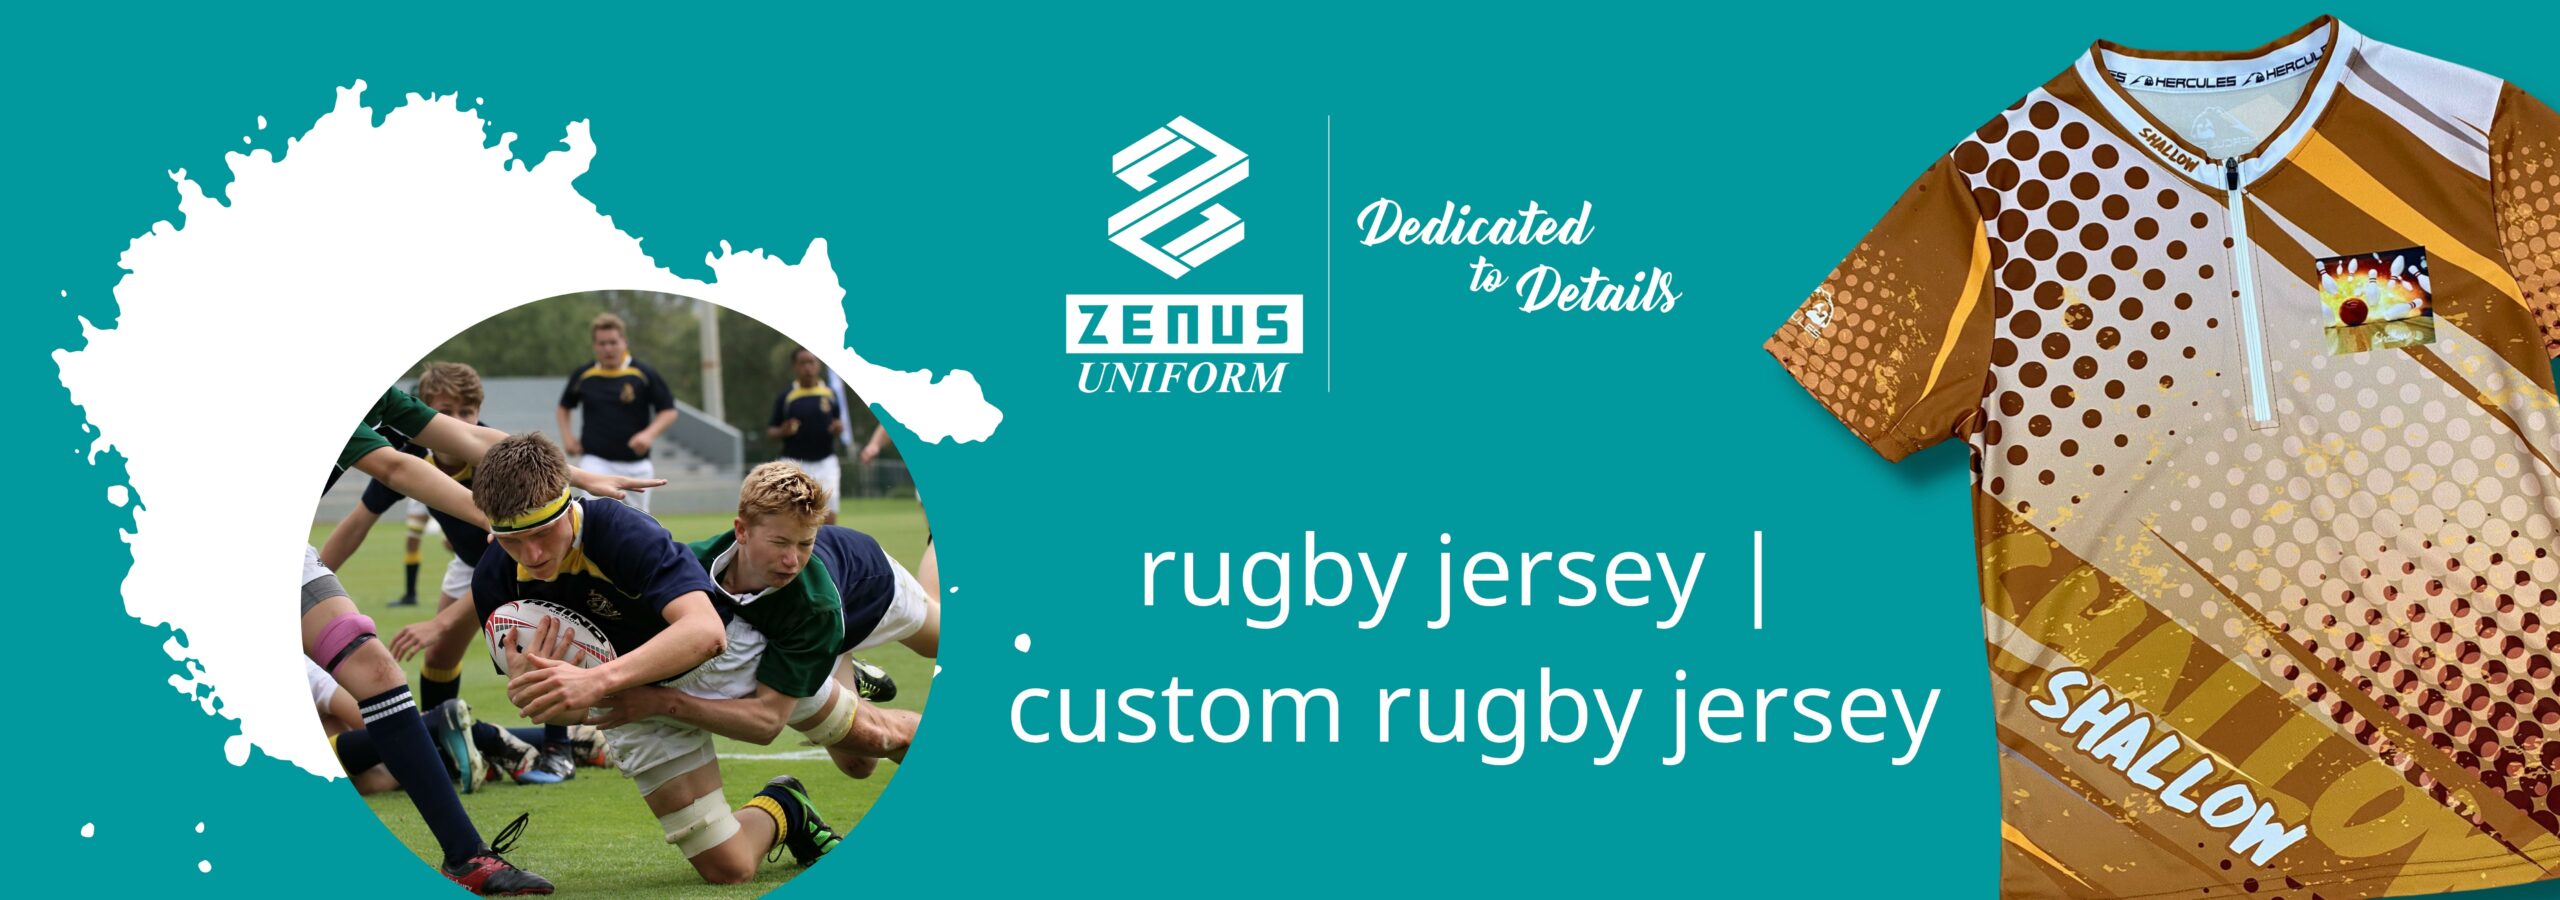 rugby jersey，custom rugby jesrey banenr